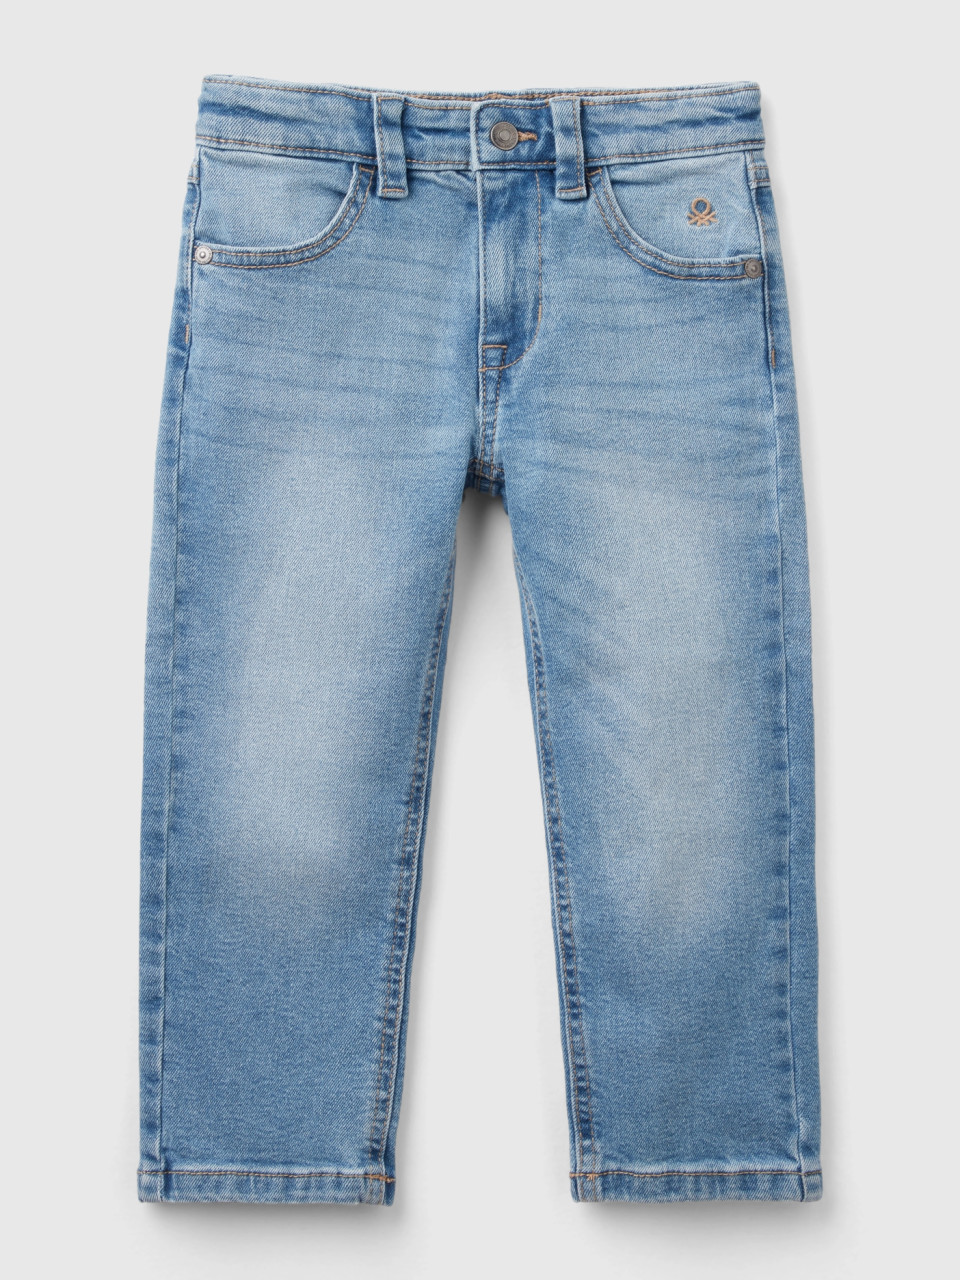 Benetton, 5-pocket-jeans 